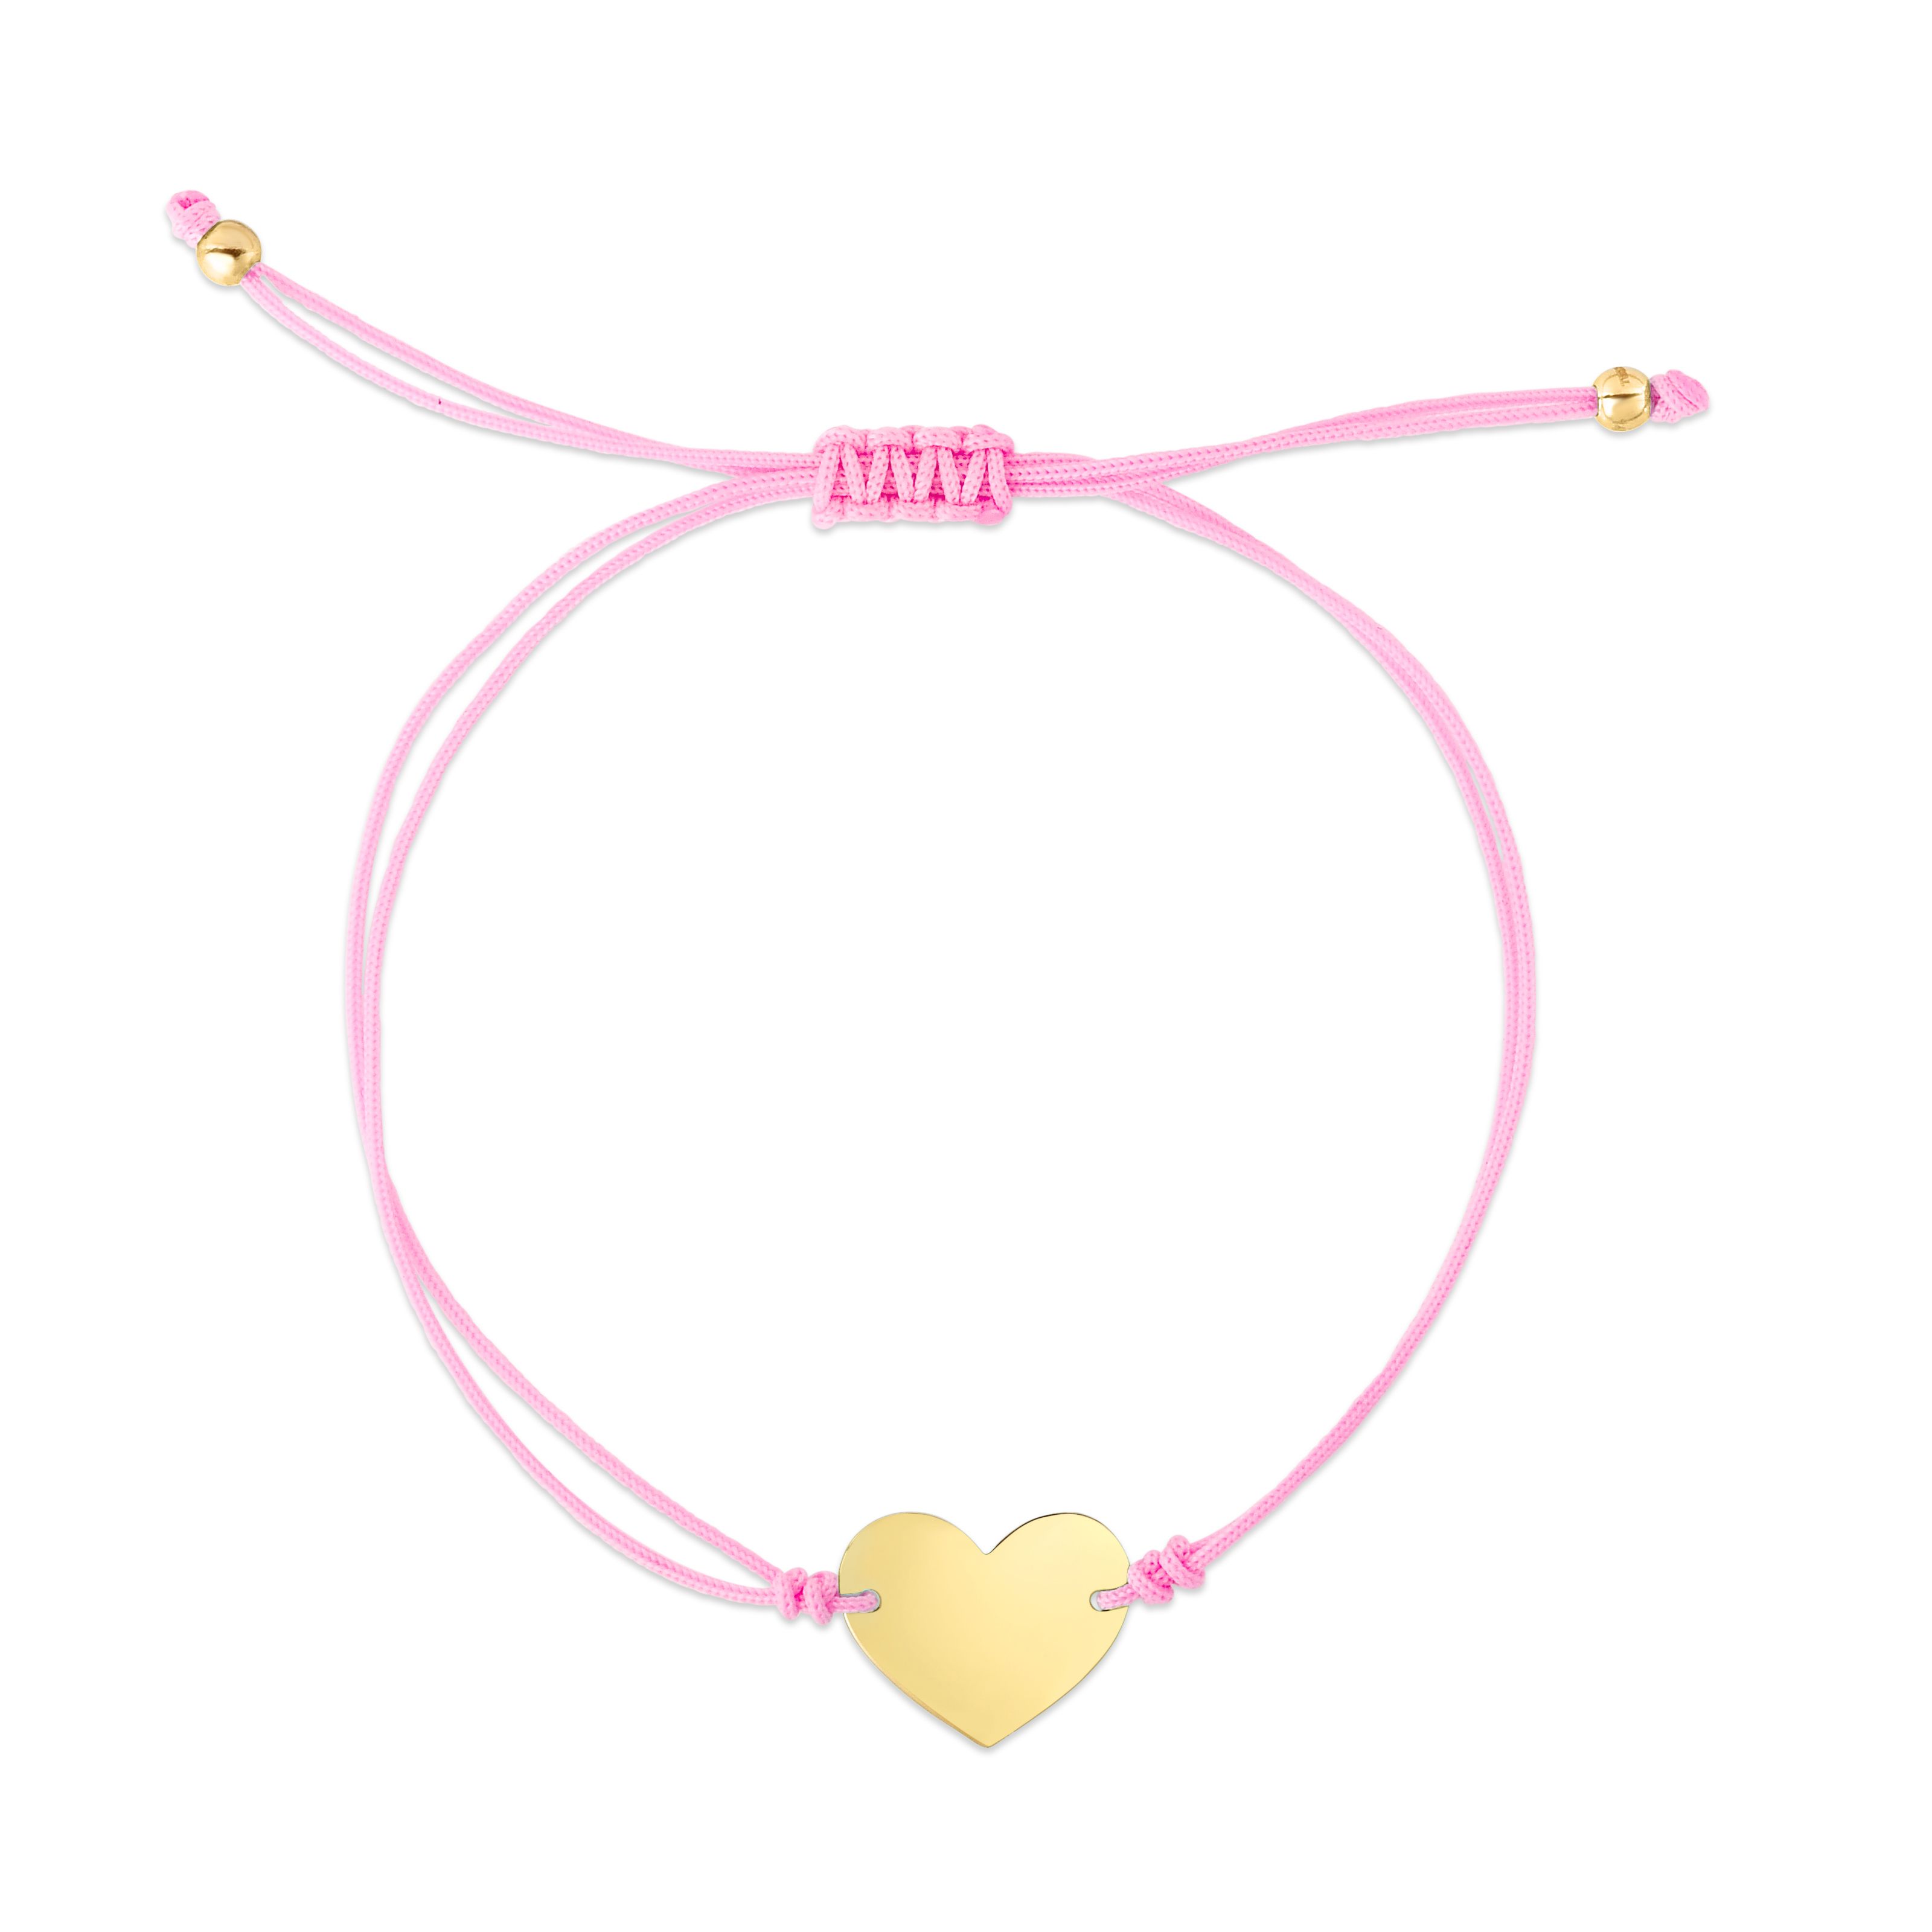 Elegant Rachel Zoe Heart Bracelet